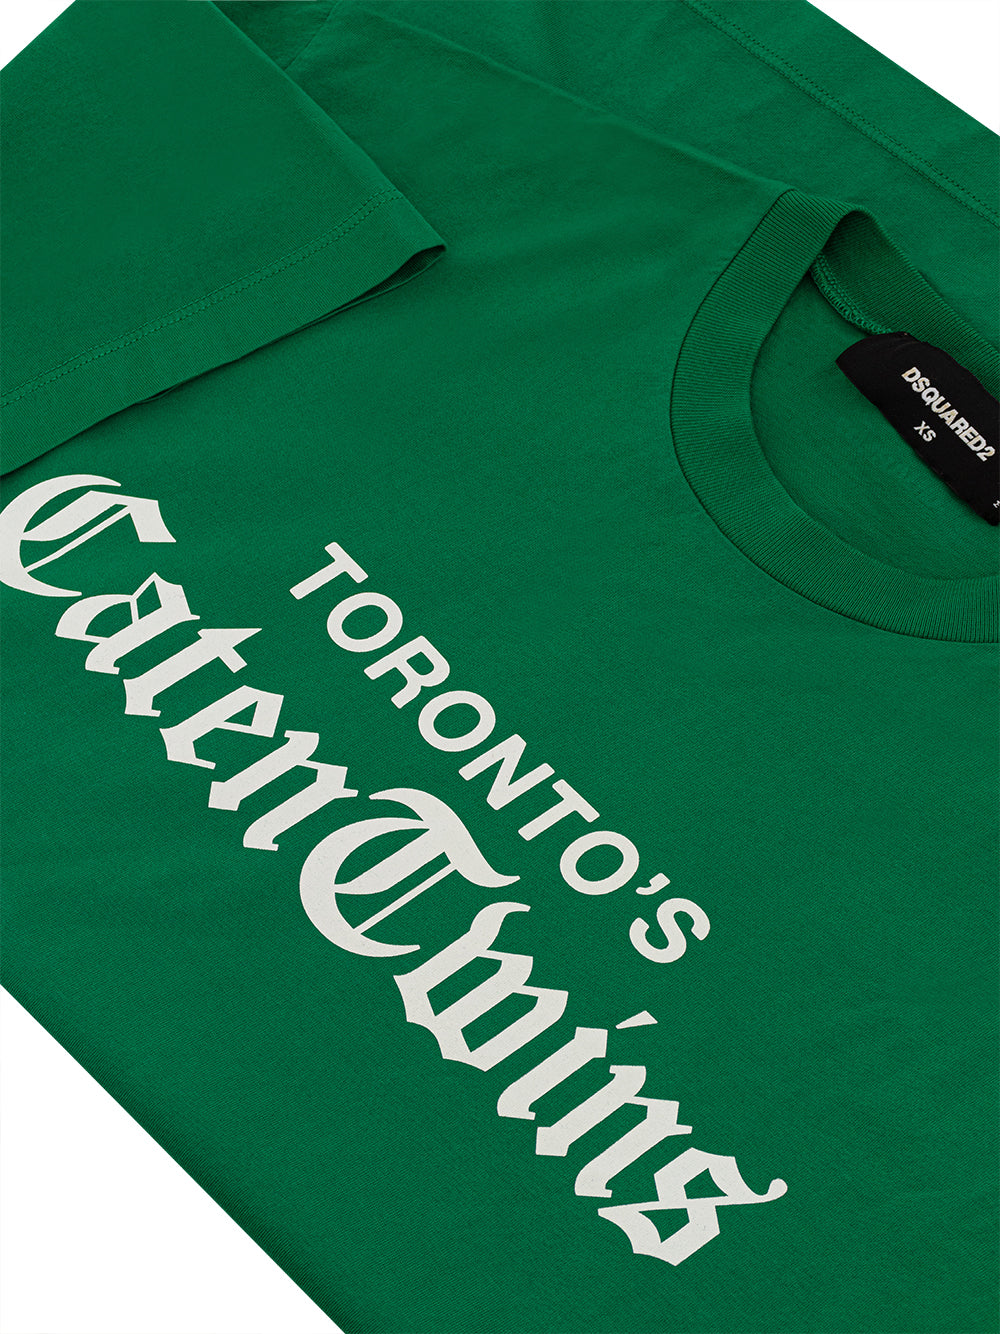 T-Shirt Toronto's Caten Dsquared2